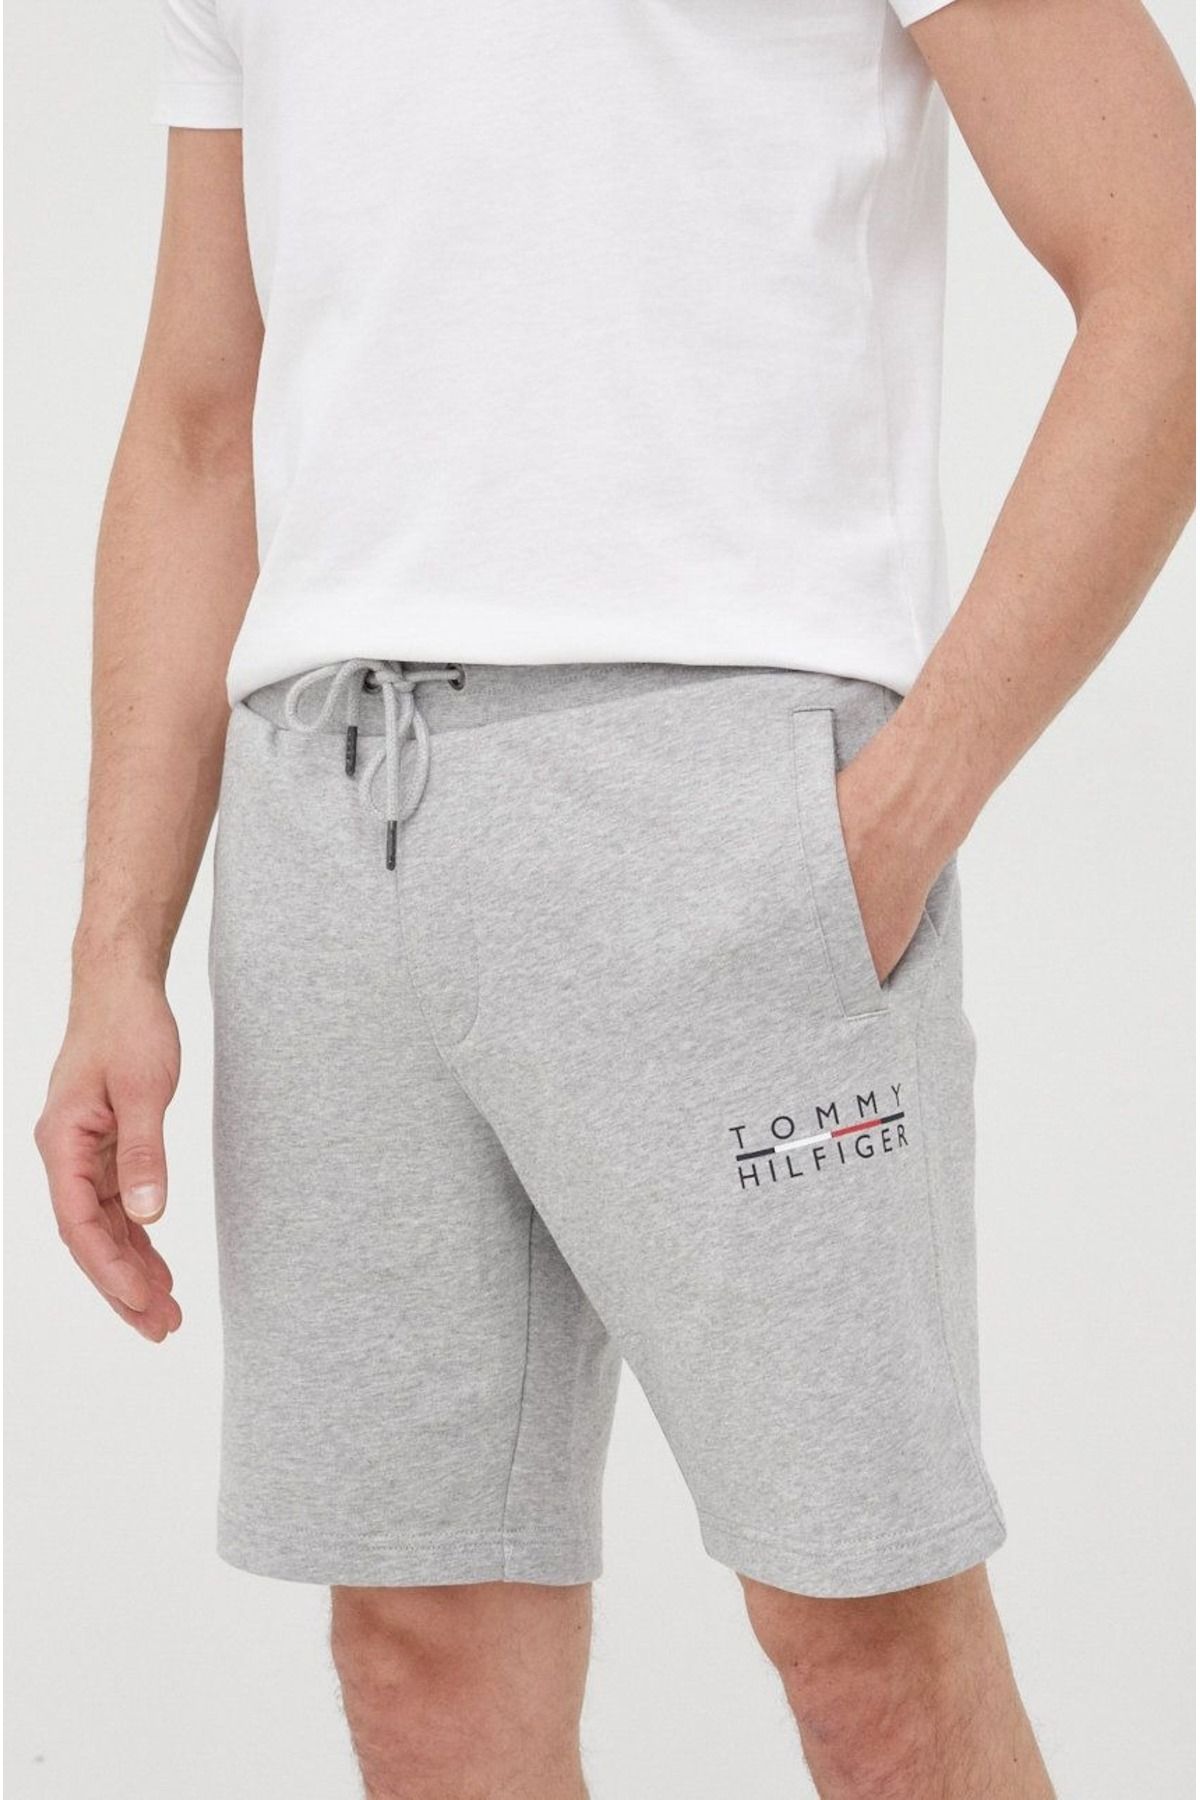 Tommy Hilfiger Square Logo Sports Shorts Gray Regular Fit MEN